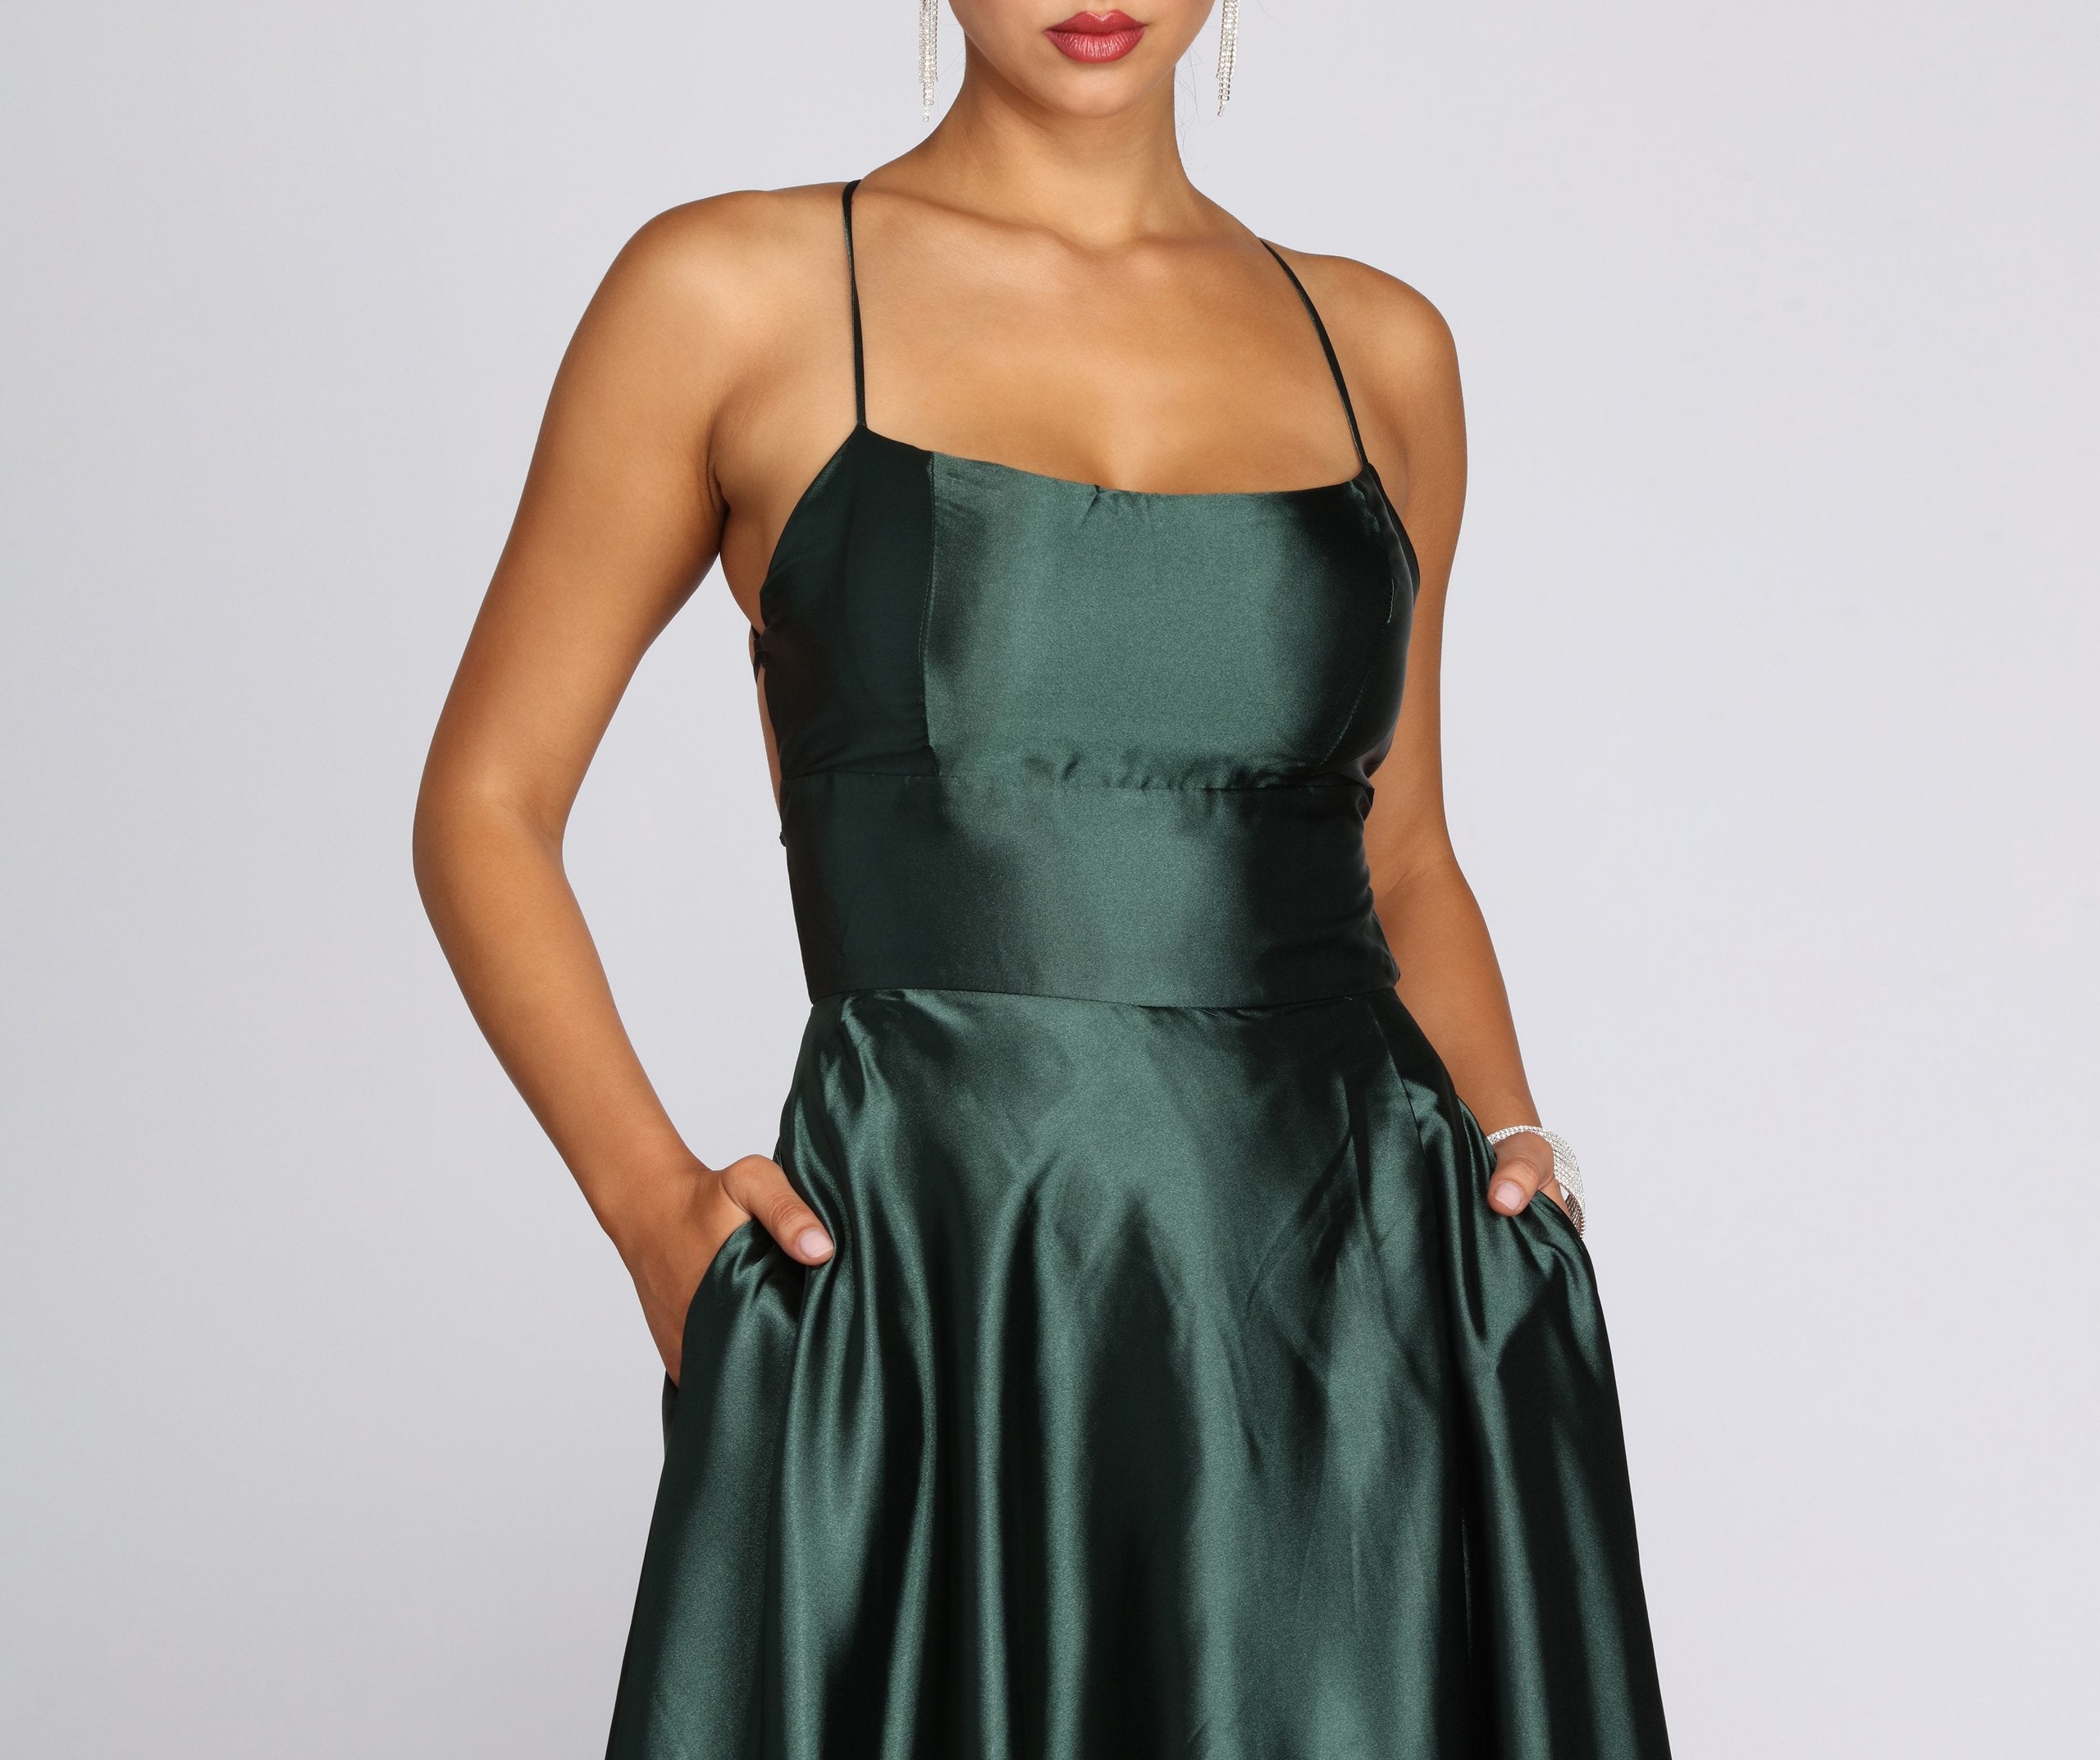 Anne Formal Lattice Satin Dress - Lady Occasions